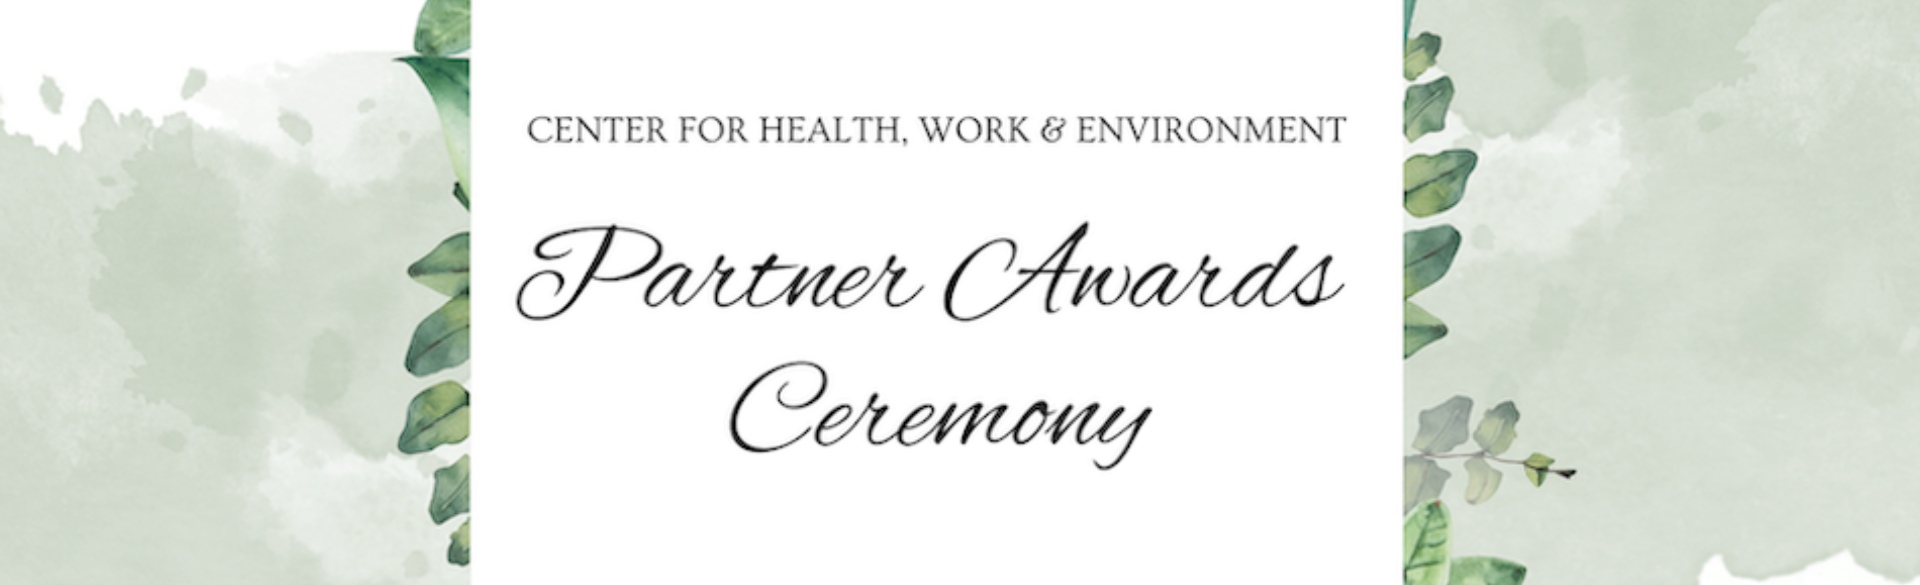 Awards ceremony logo